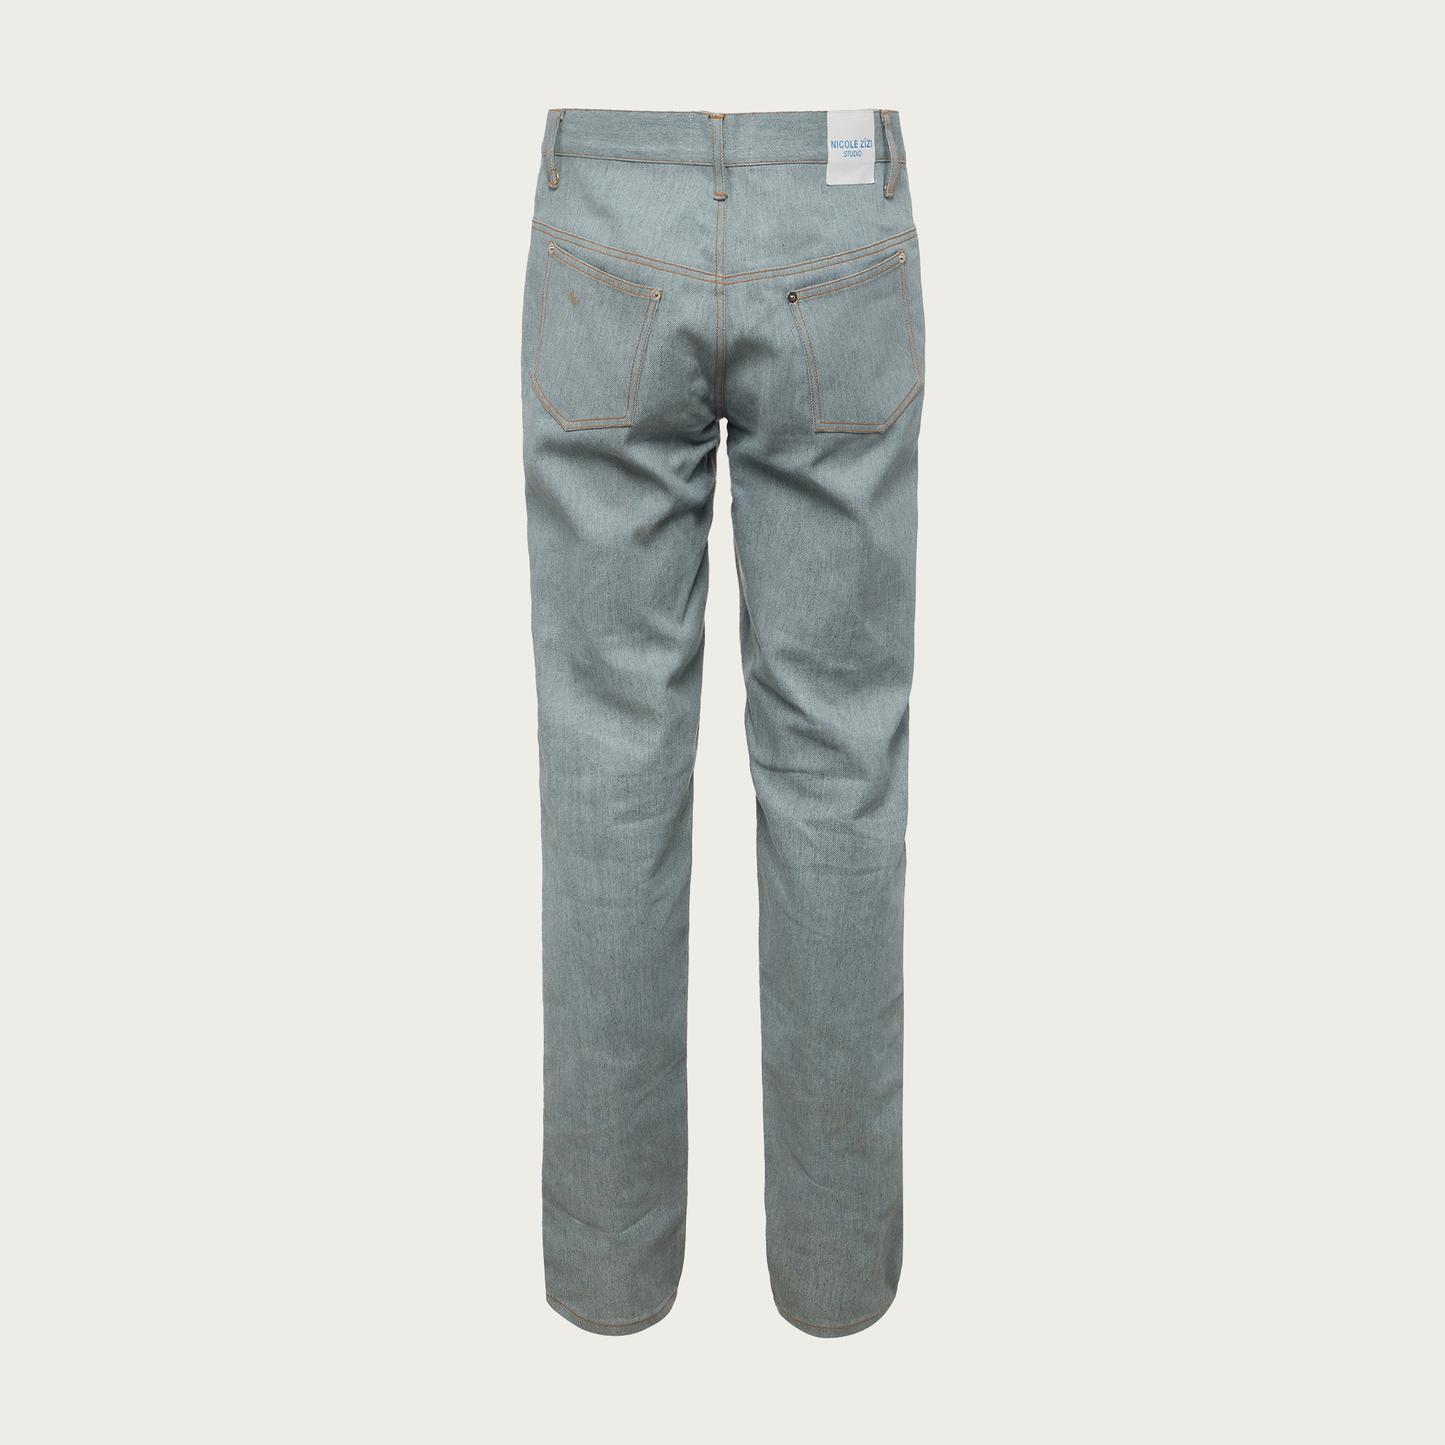 Light blue denim Skinny fit cotton jeans - Buy Online | Terranova